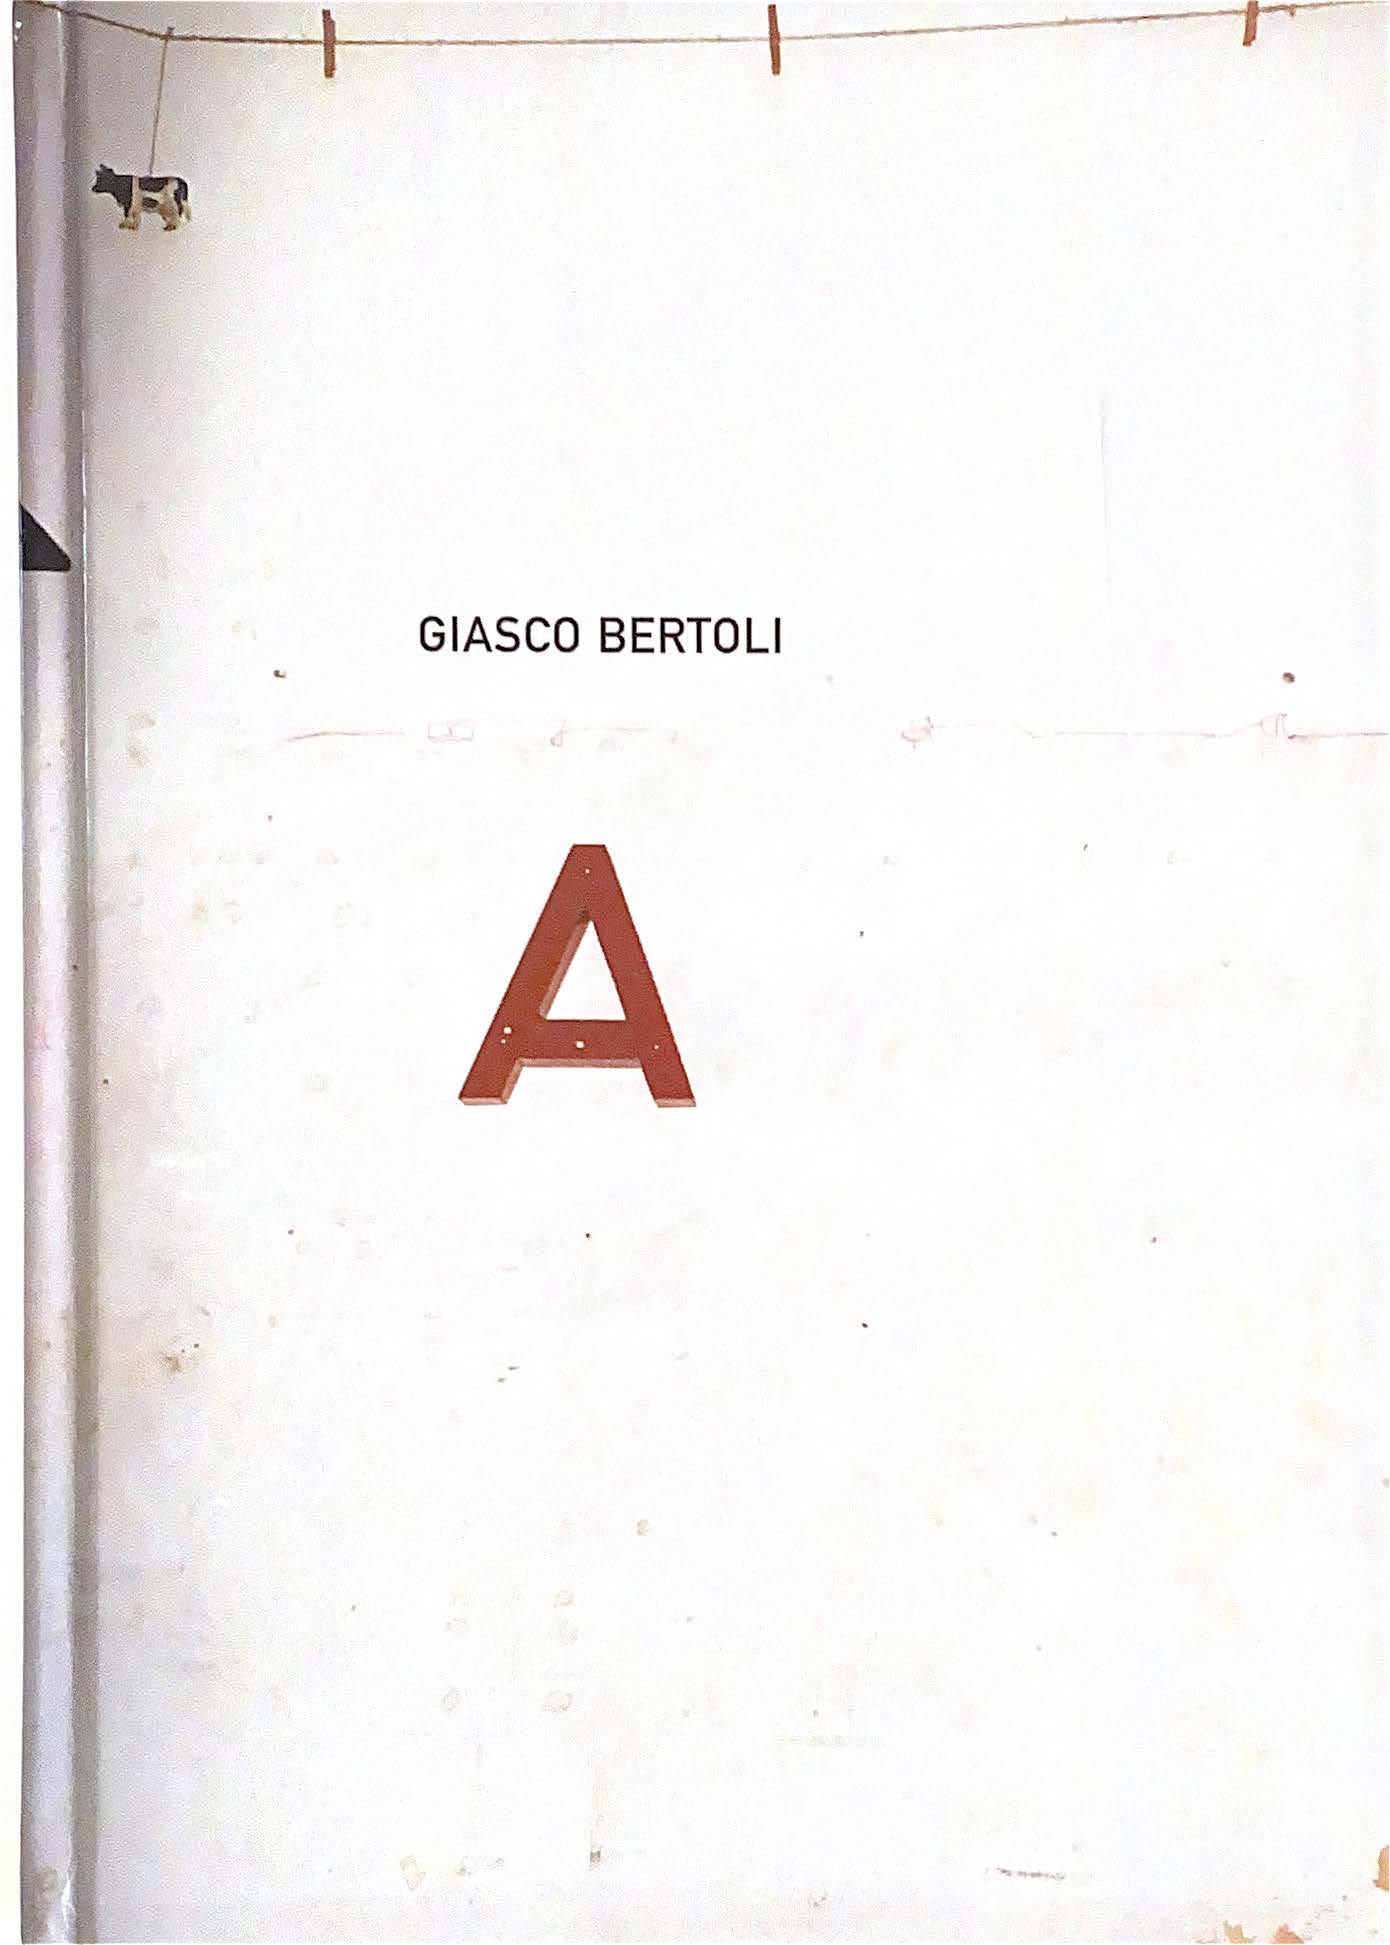 Giasco Bertoli